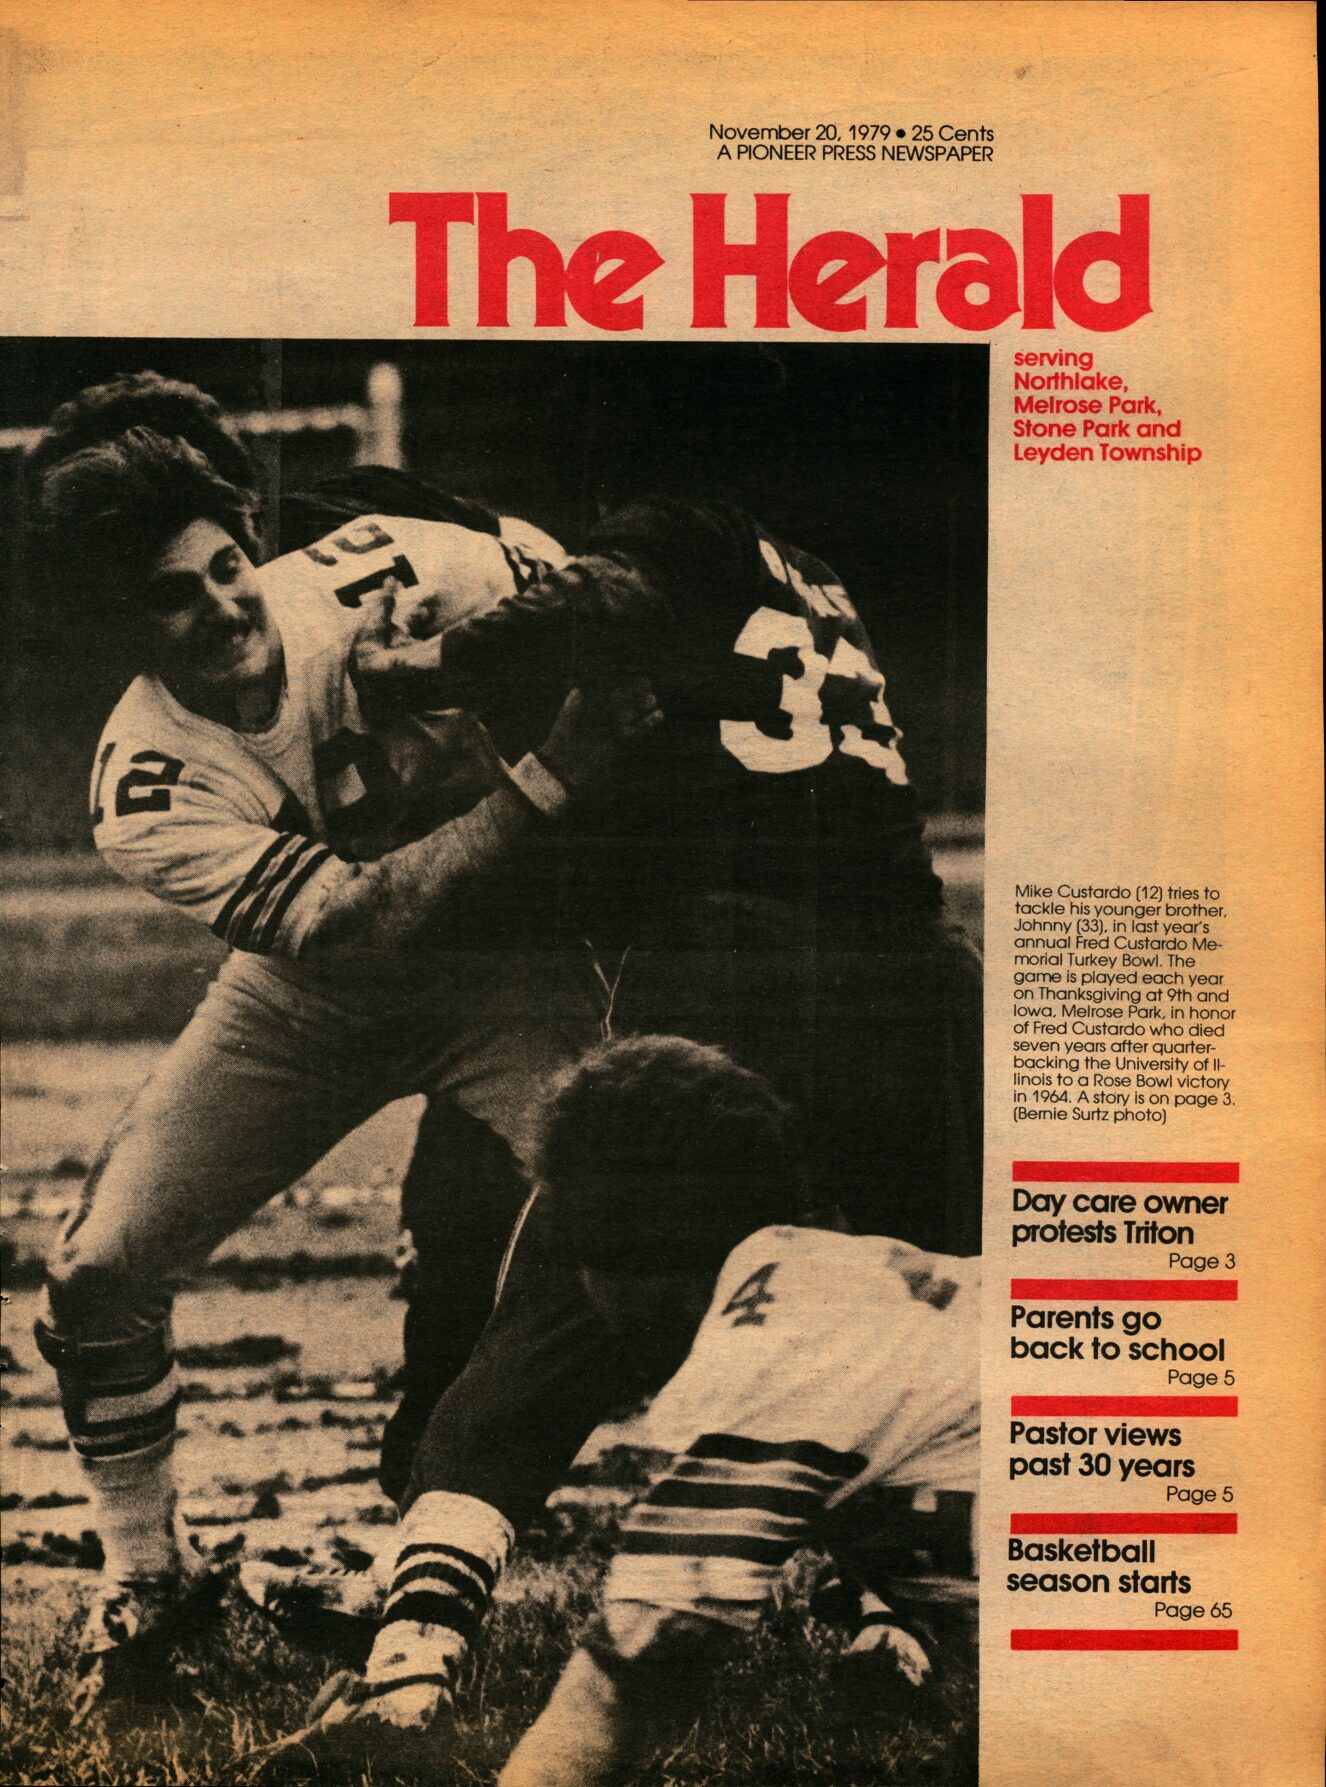 The Herald – 19791120